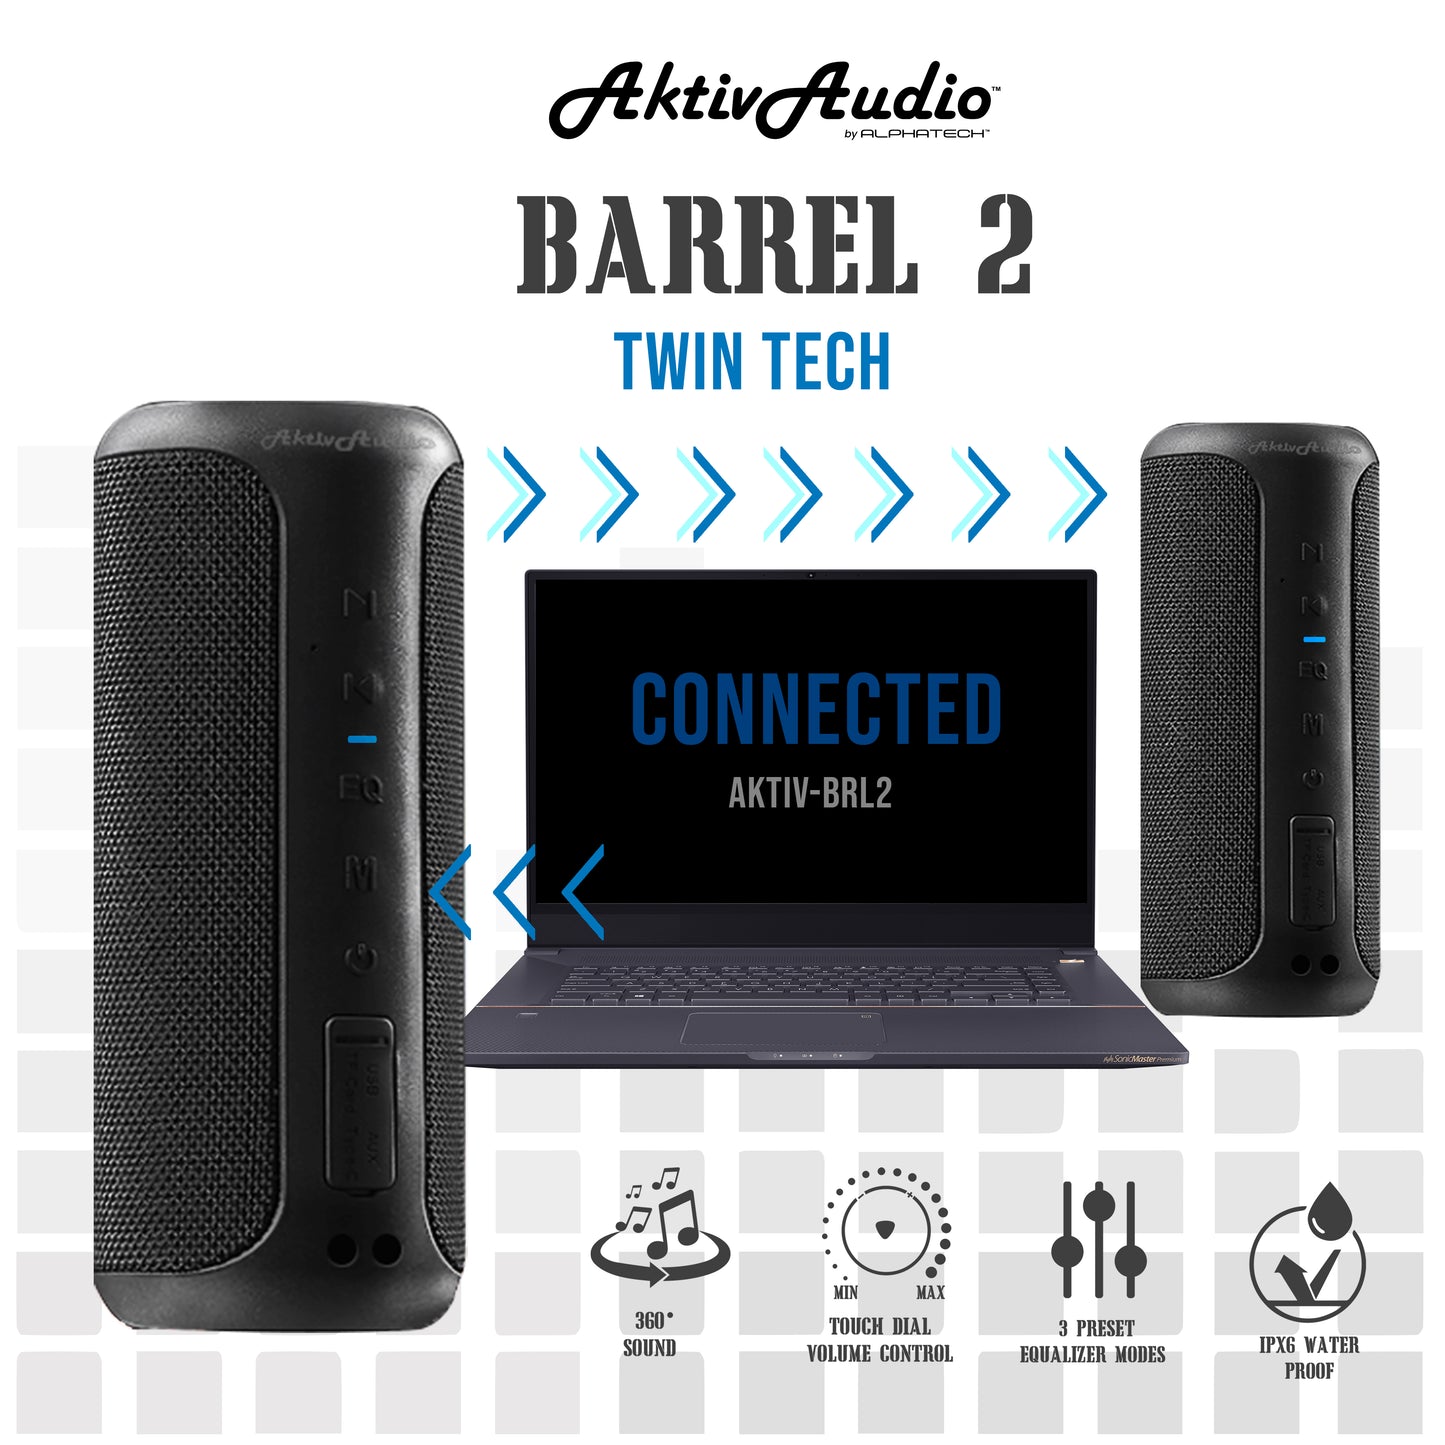 Aktiv Audio Barrel 2 Speaker